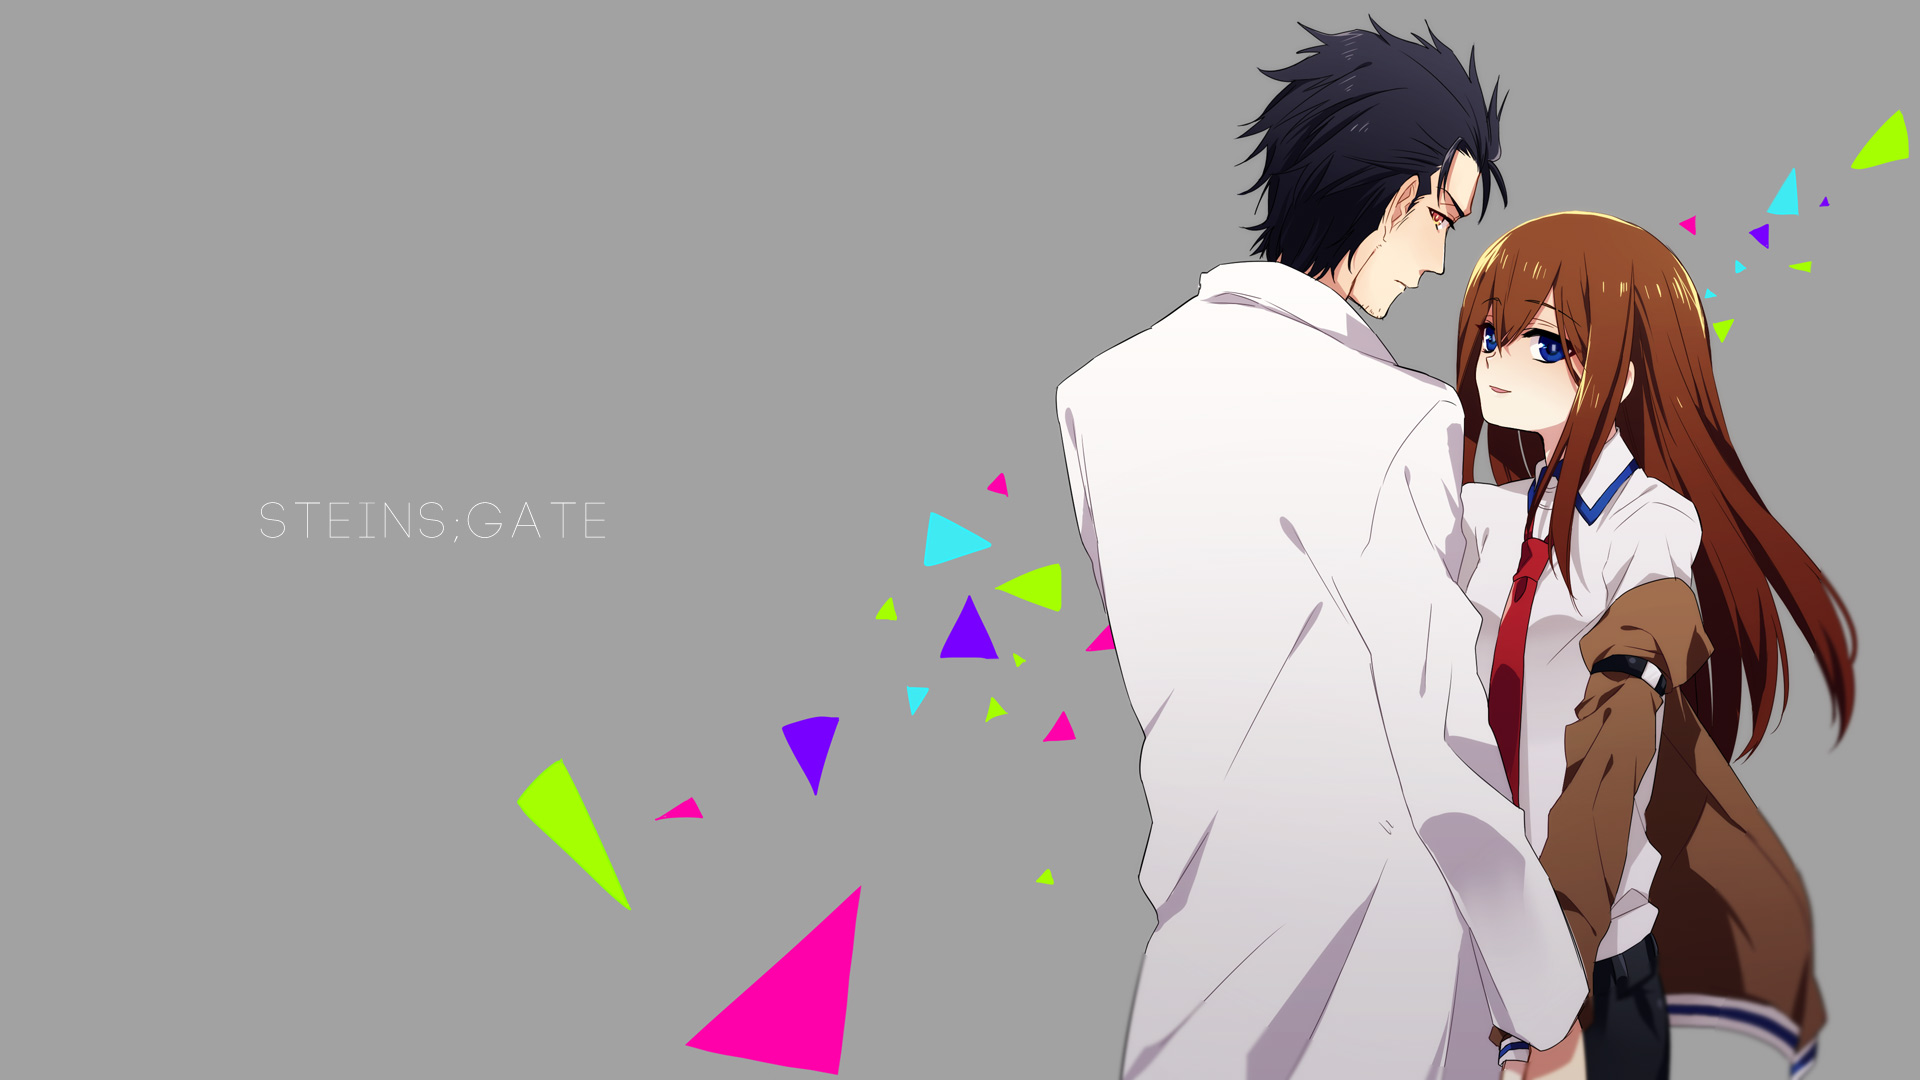 Anime Steins;Gate HD Wallpaper by だめあき